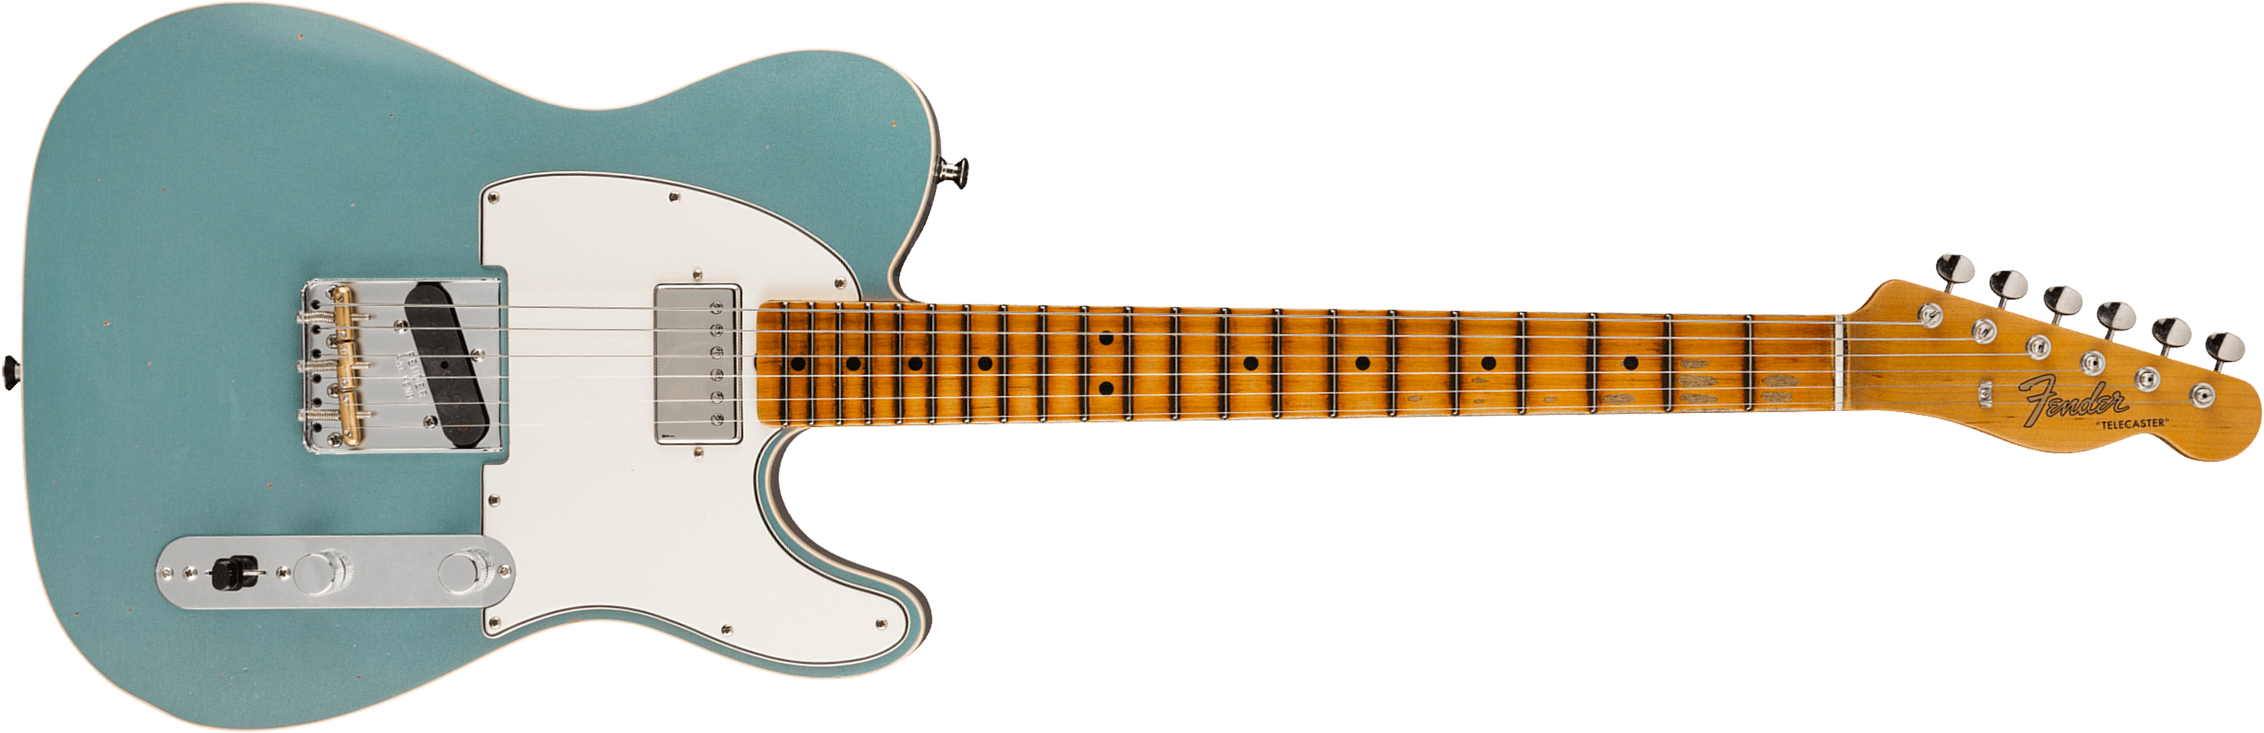 Fender Custom Shop Tele Postmodern Usa Sh Ht Mn - Journeyman Relic Firemist Silver - Televorm elektrische gitaar - Main picture